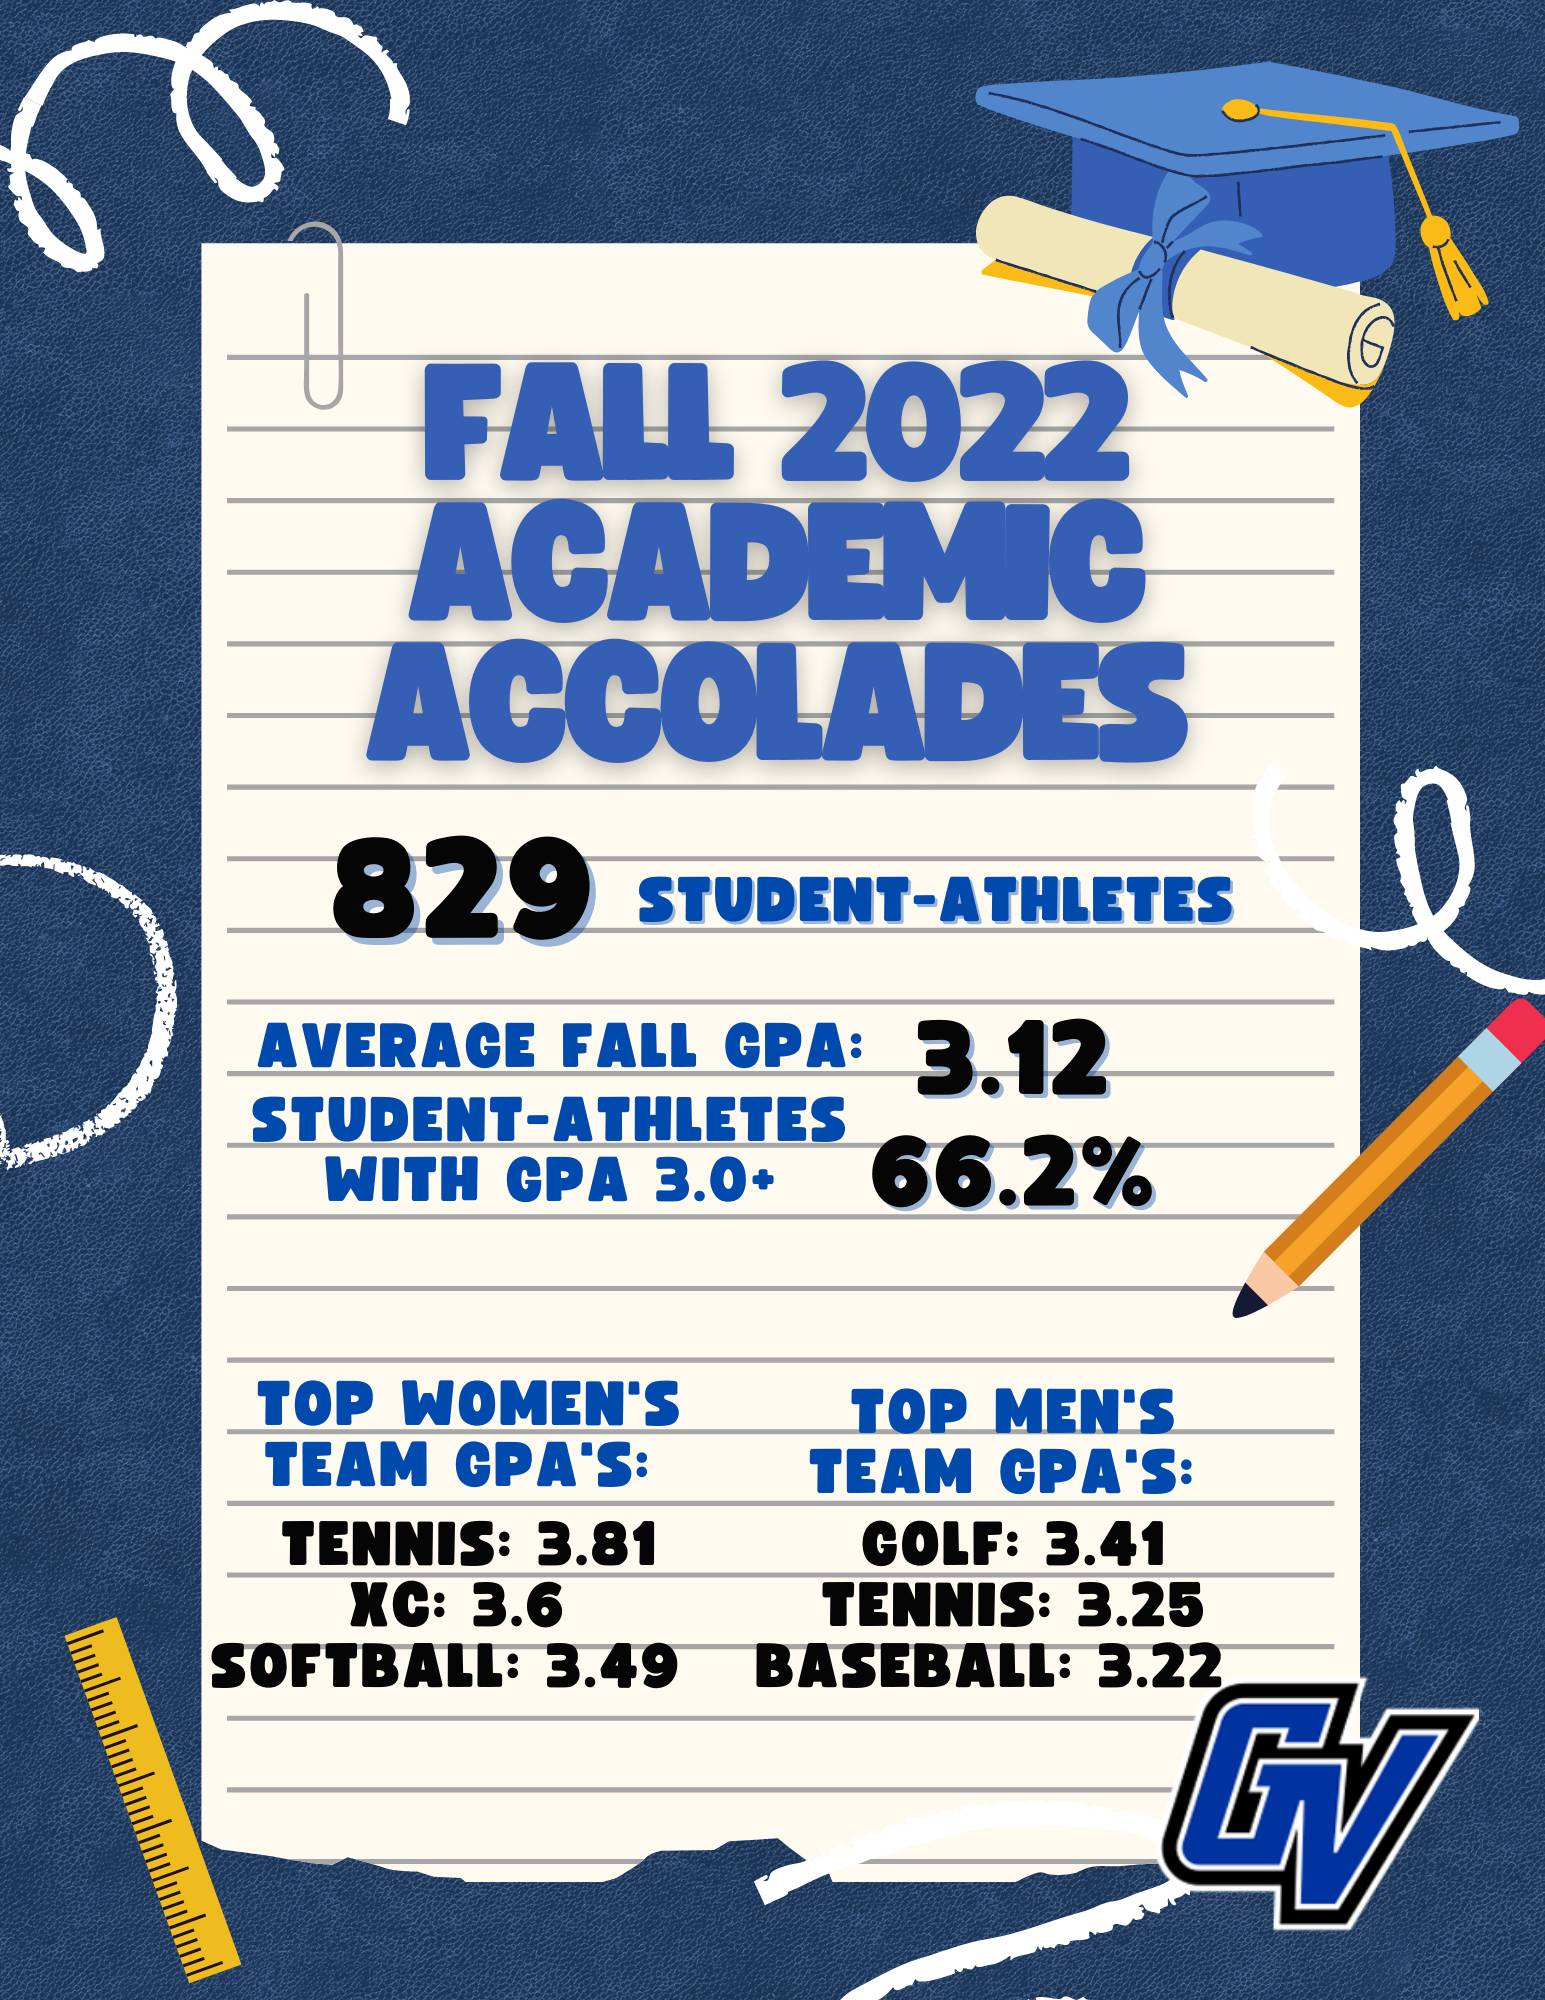 Fall '22 Academic Accolades